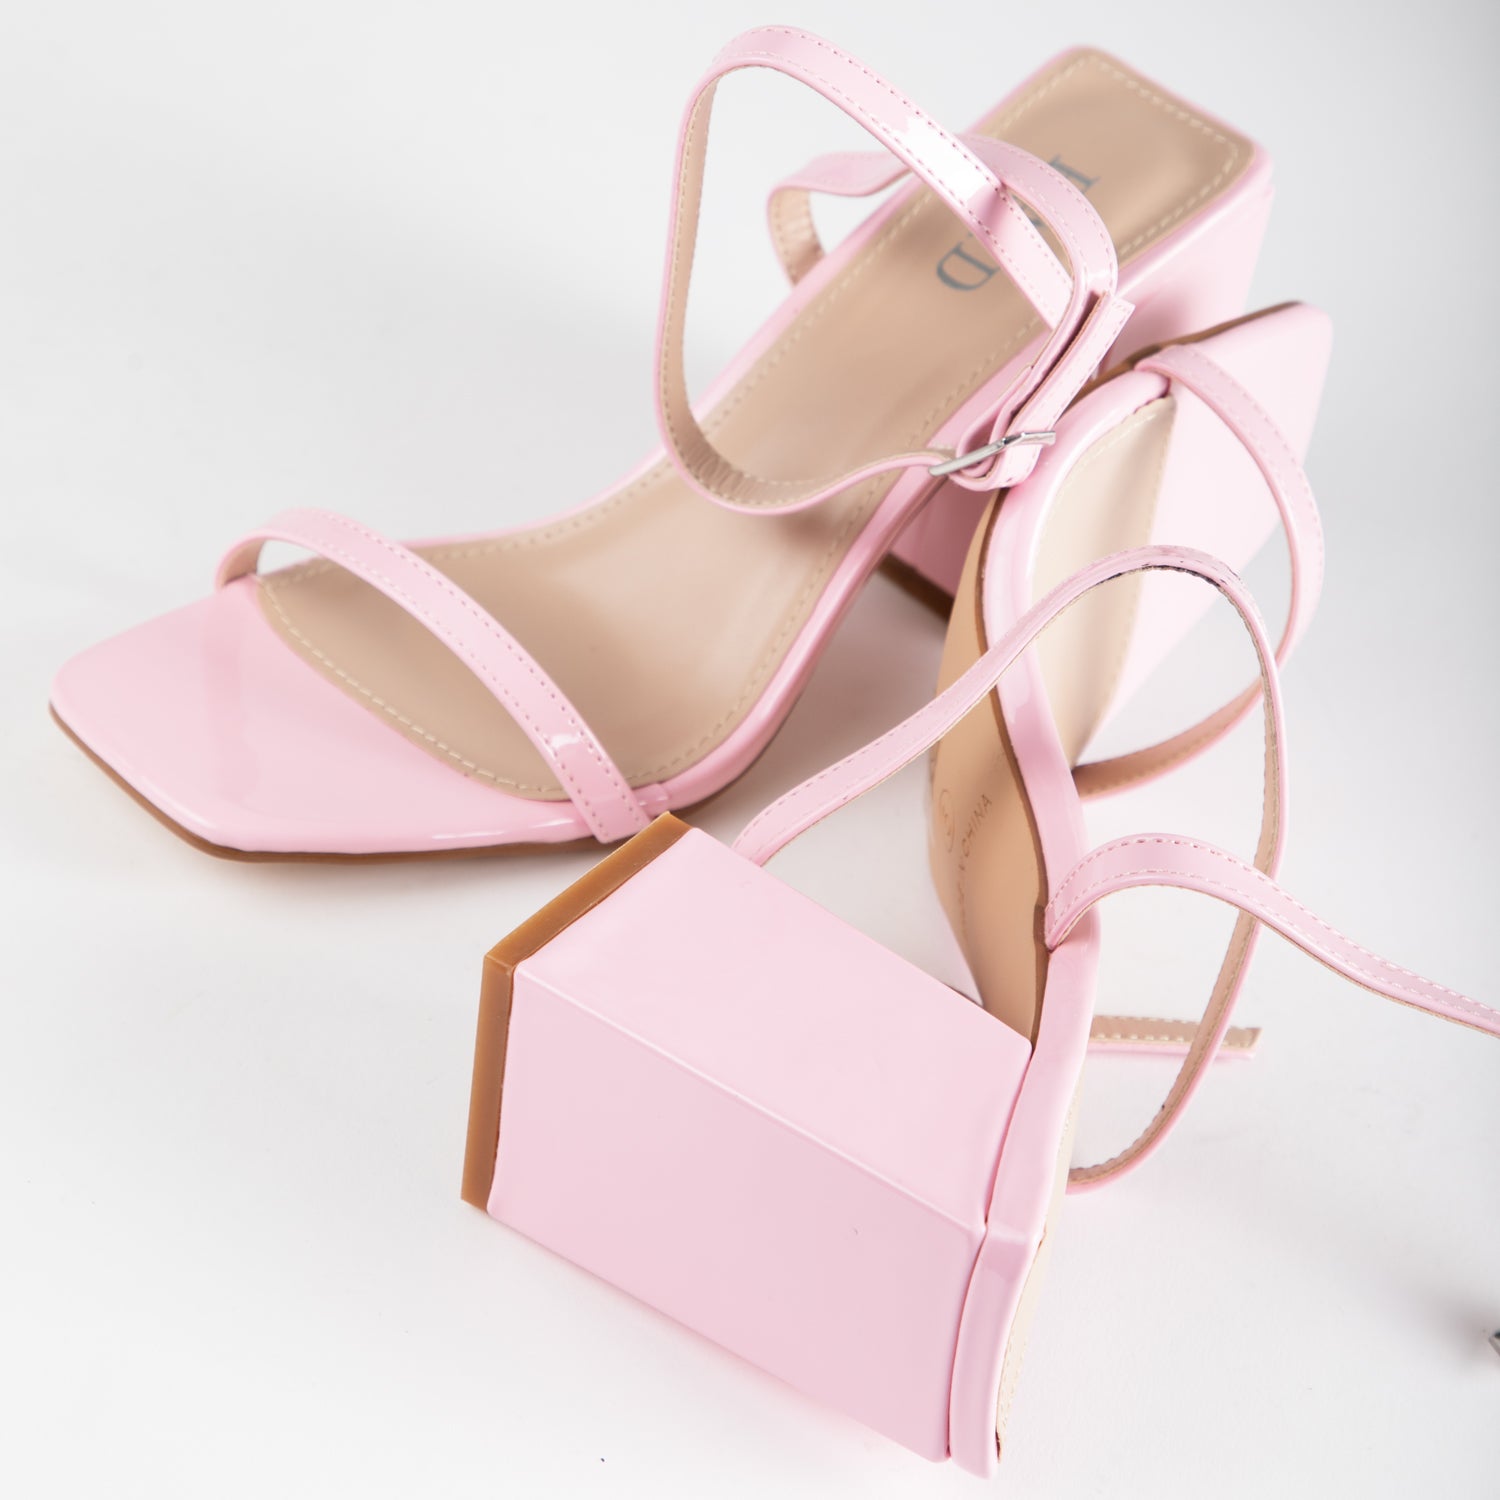 RAID Garry Block Heel Sandal in Pink Patent